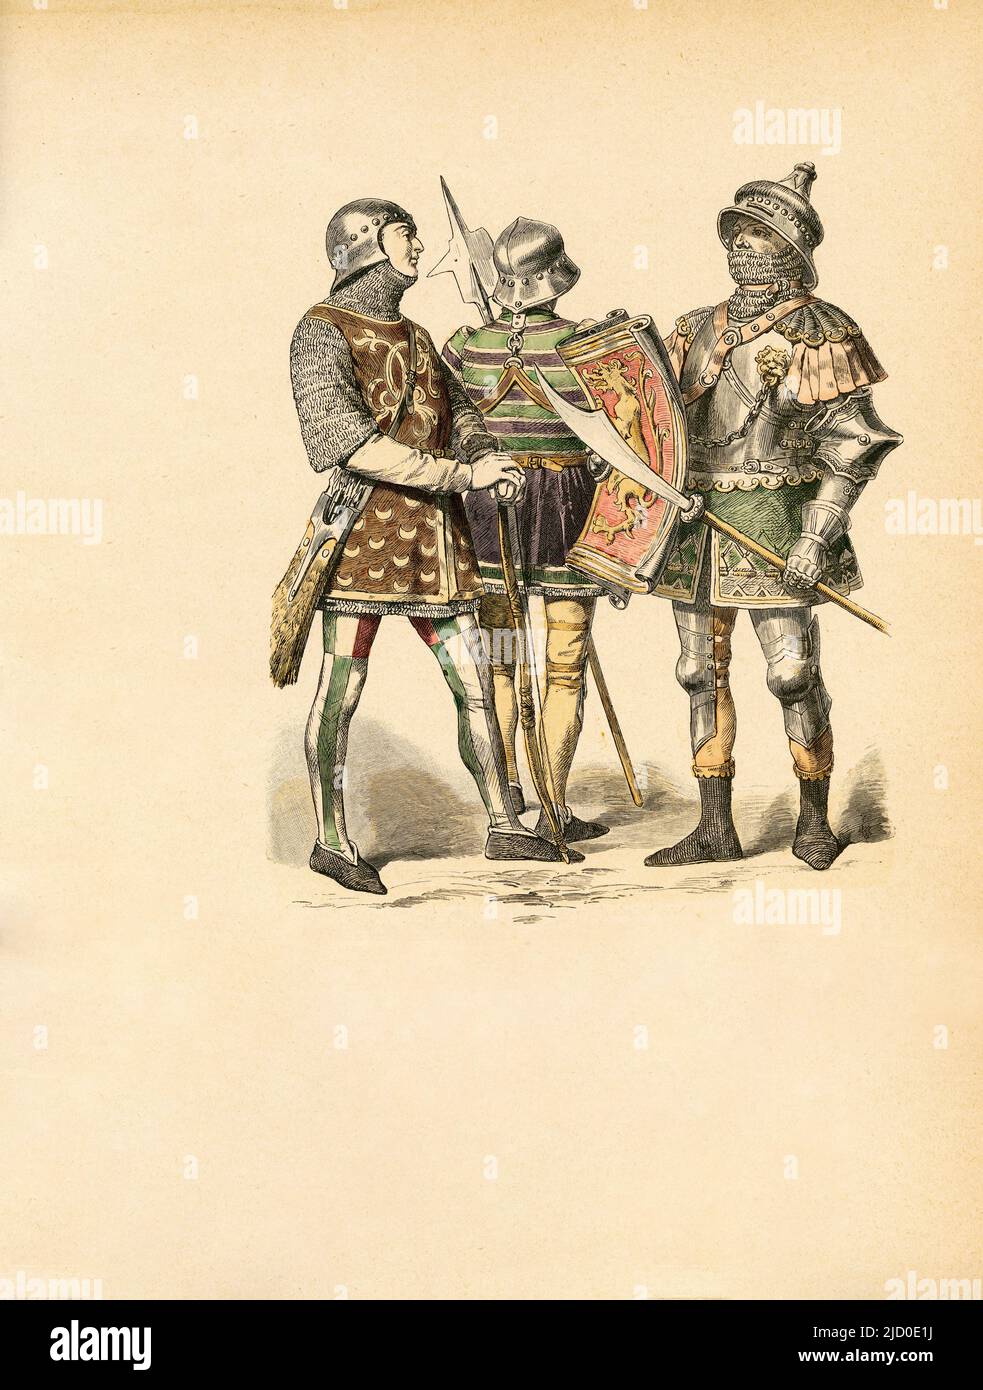 Knights, Burgundy, 1470, Illustration, The History of Costume, Braun & Schneider, Munich, Germany, 1861-1880 Stock Photo